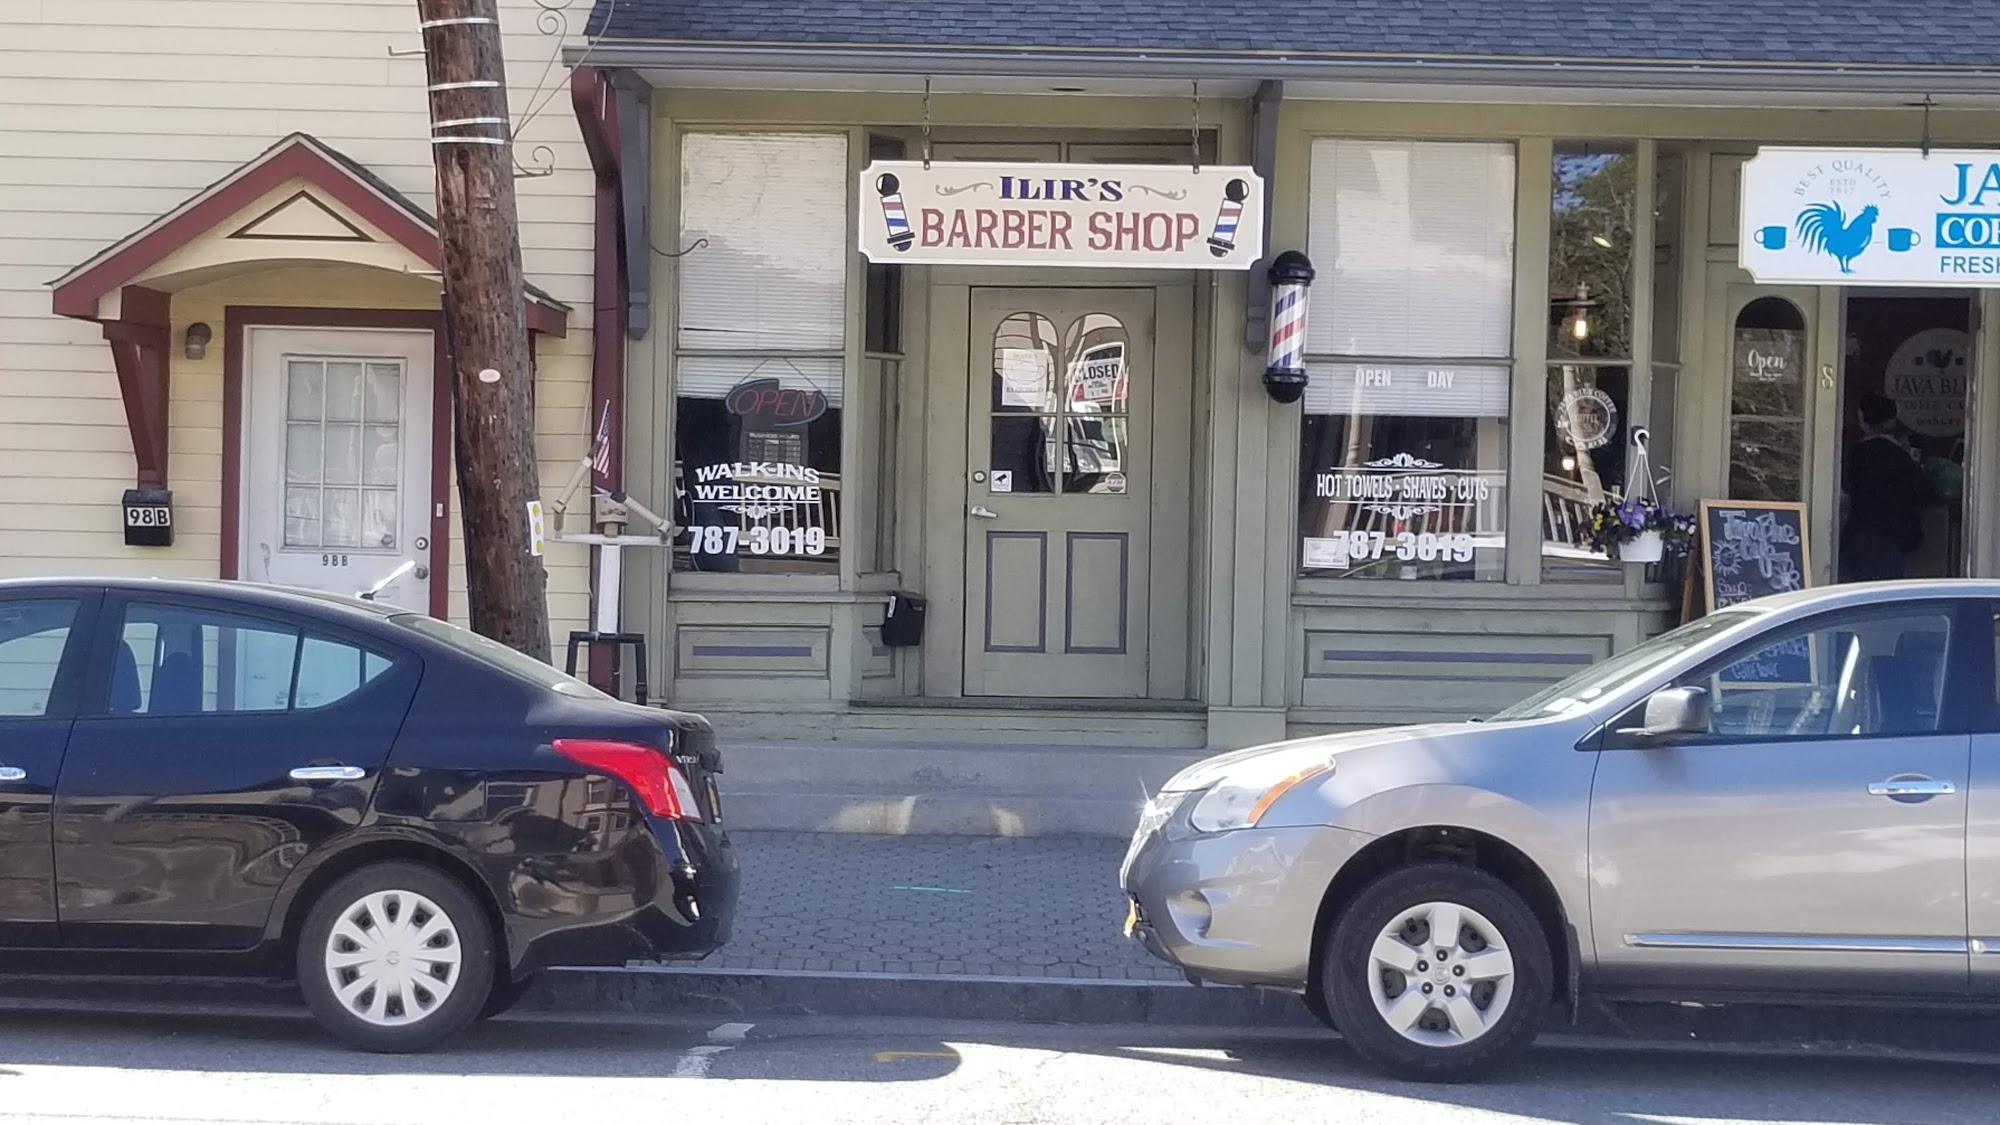 Ilir's Barber Shop